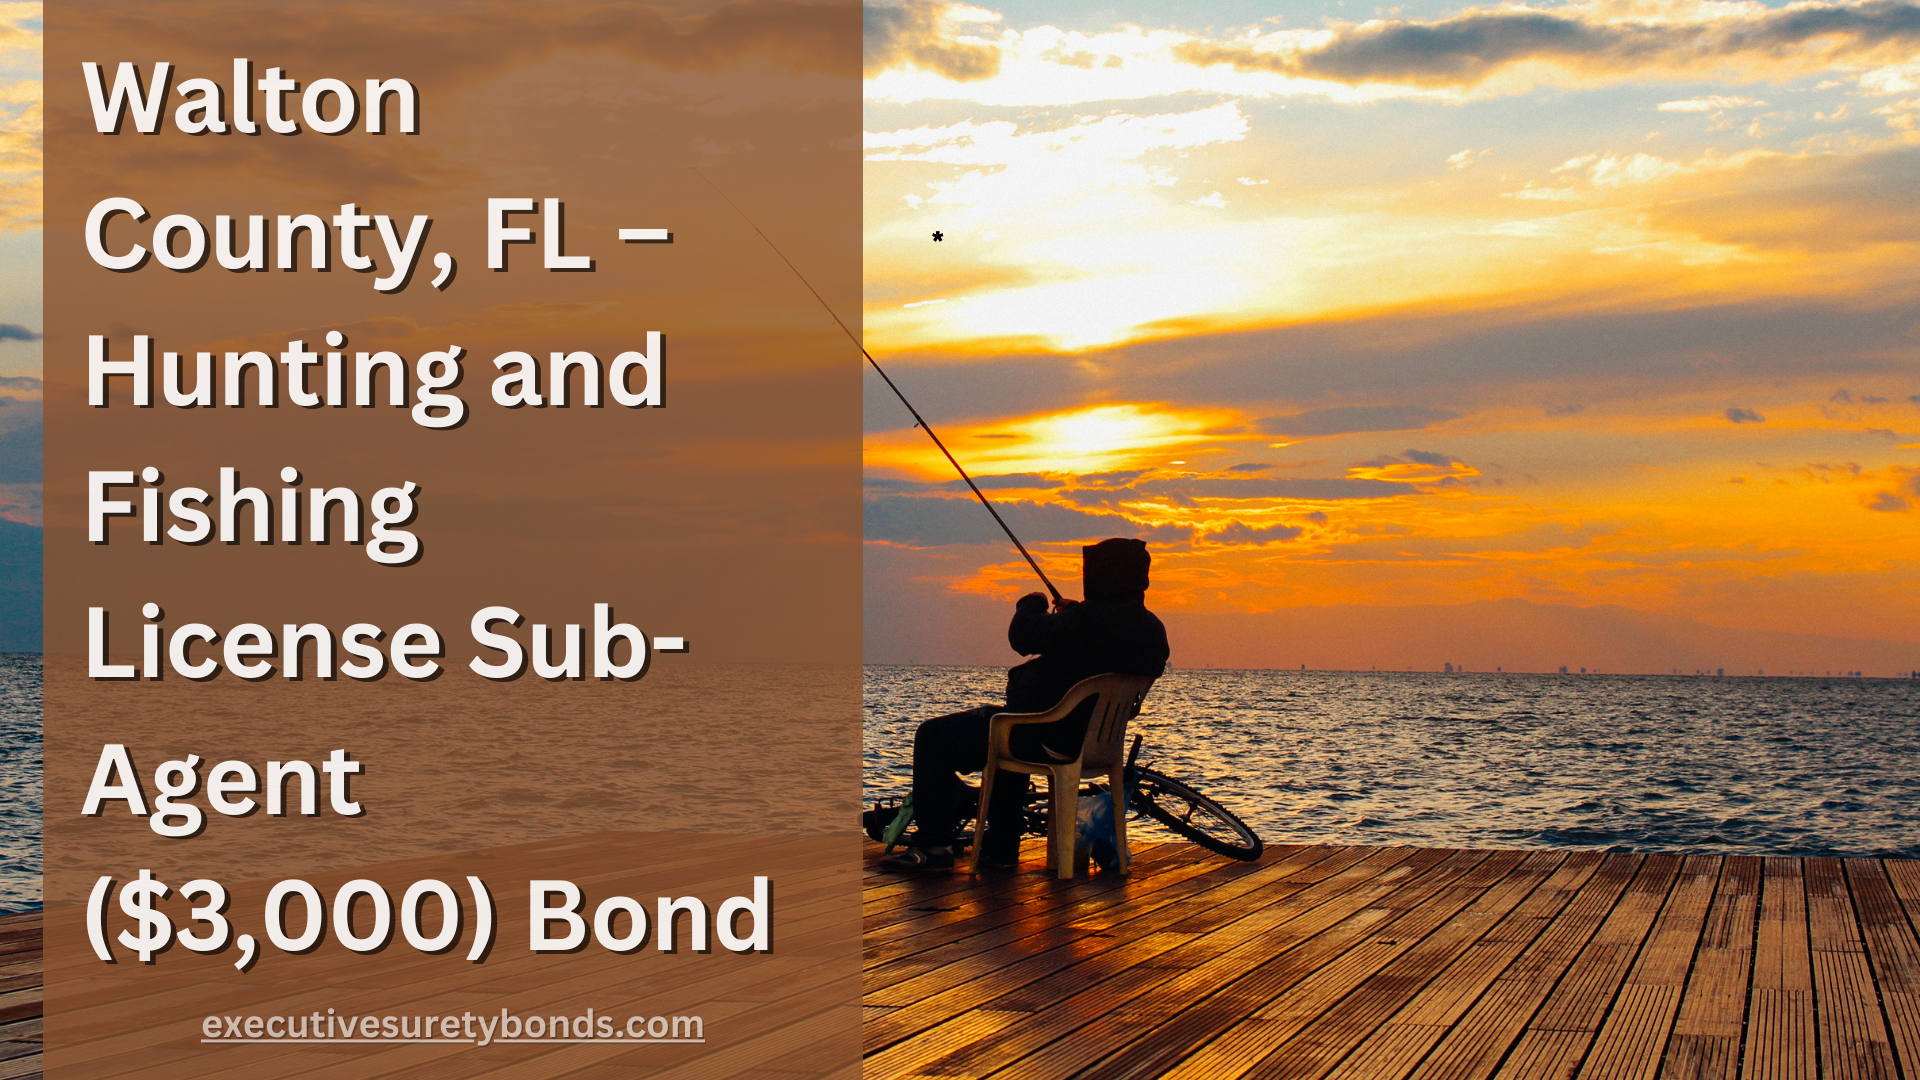 Walton County, FL – Hunting and Fishing License Sub-Agent ($3,000) Bond